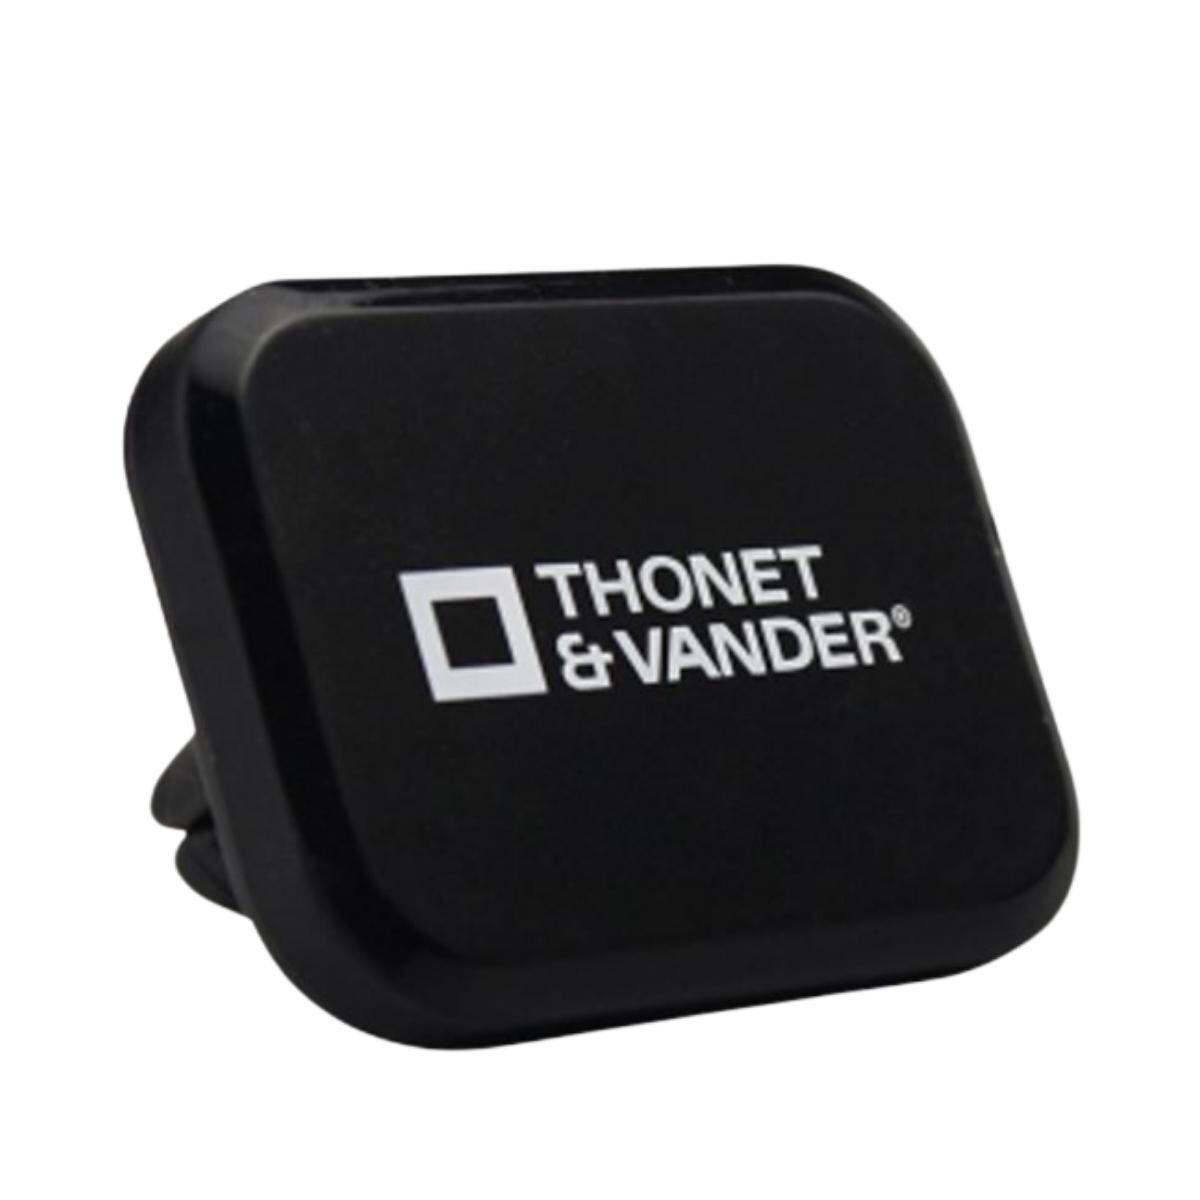 Soporte Auto Magnético Celular Tablet Gps Iman Thonet Vander 